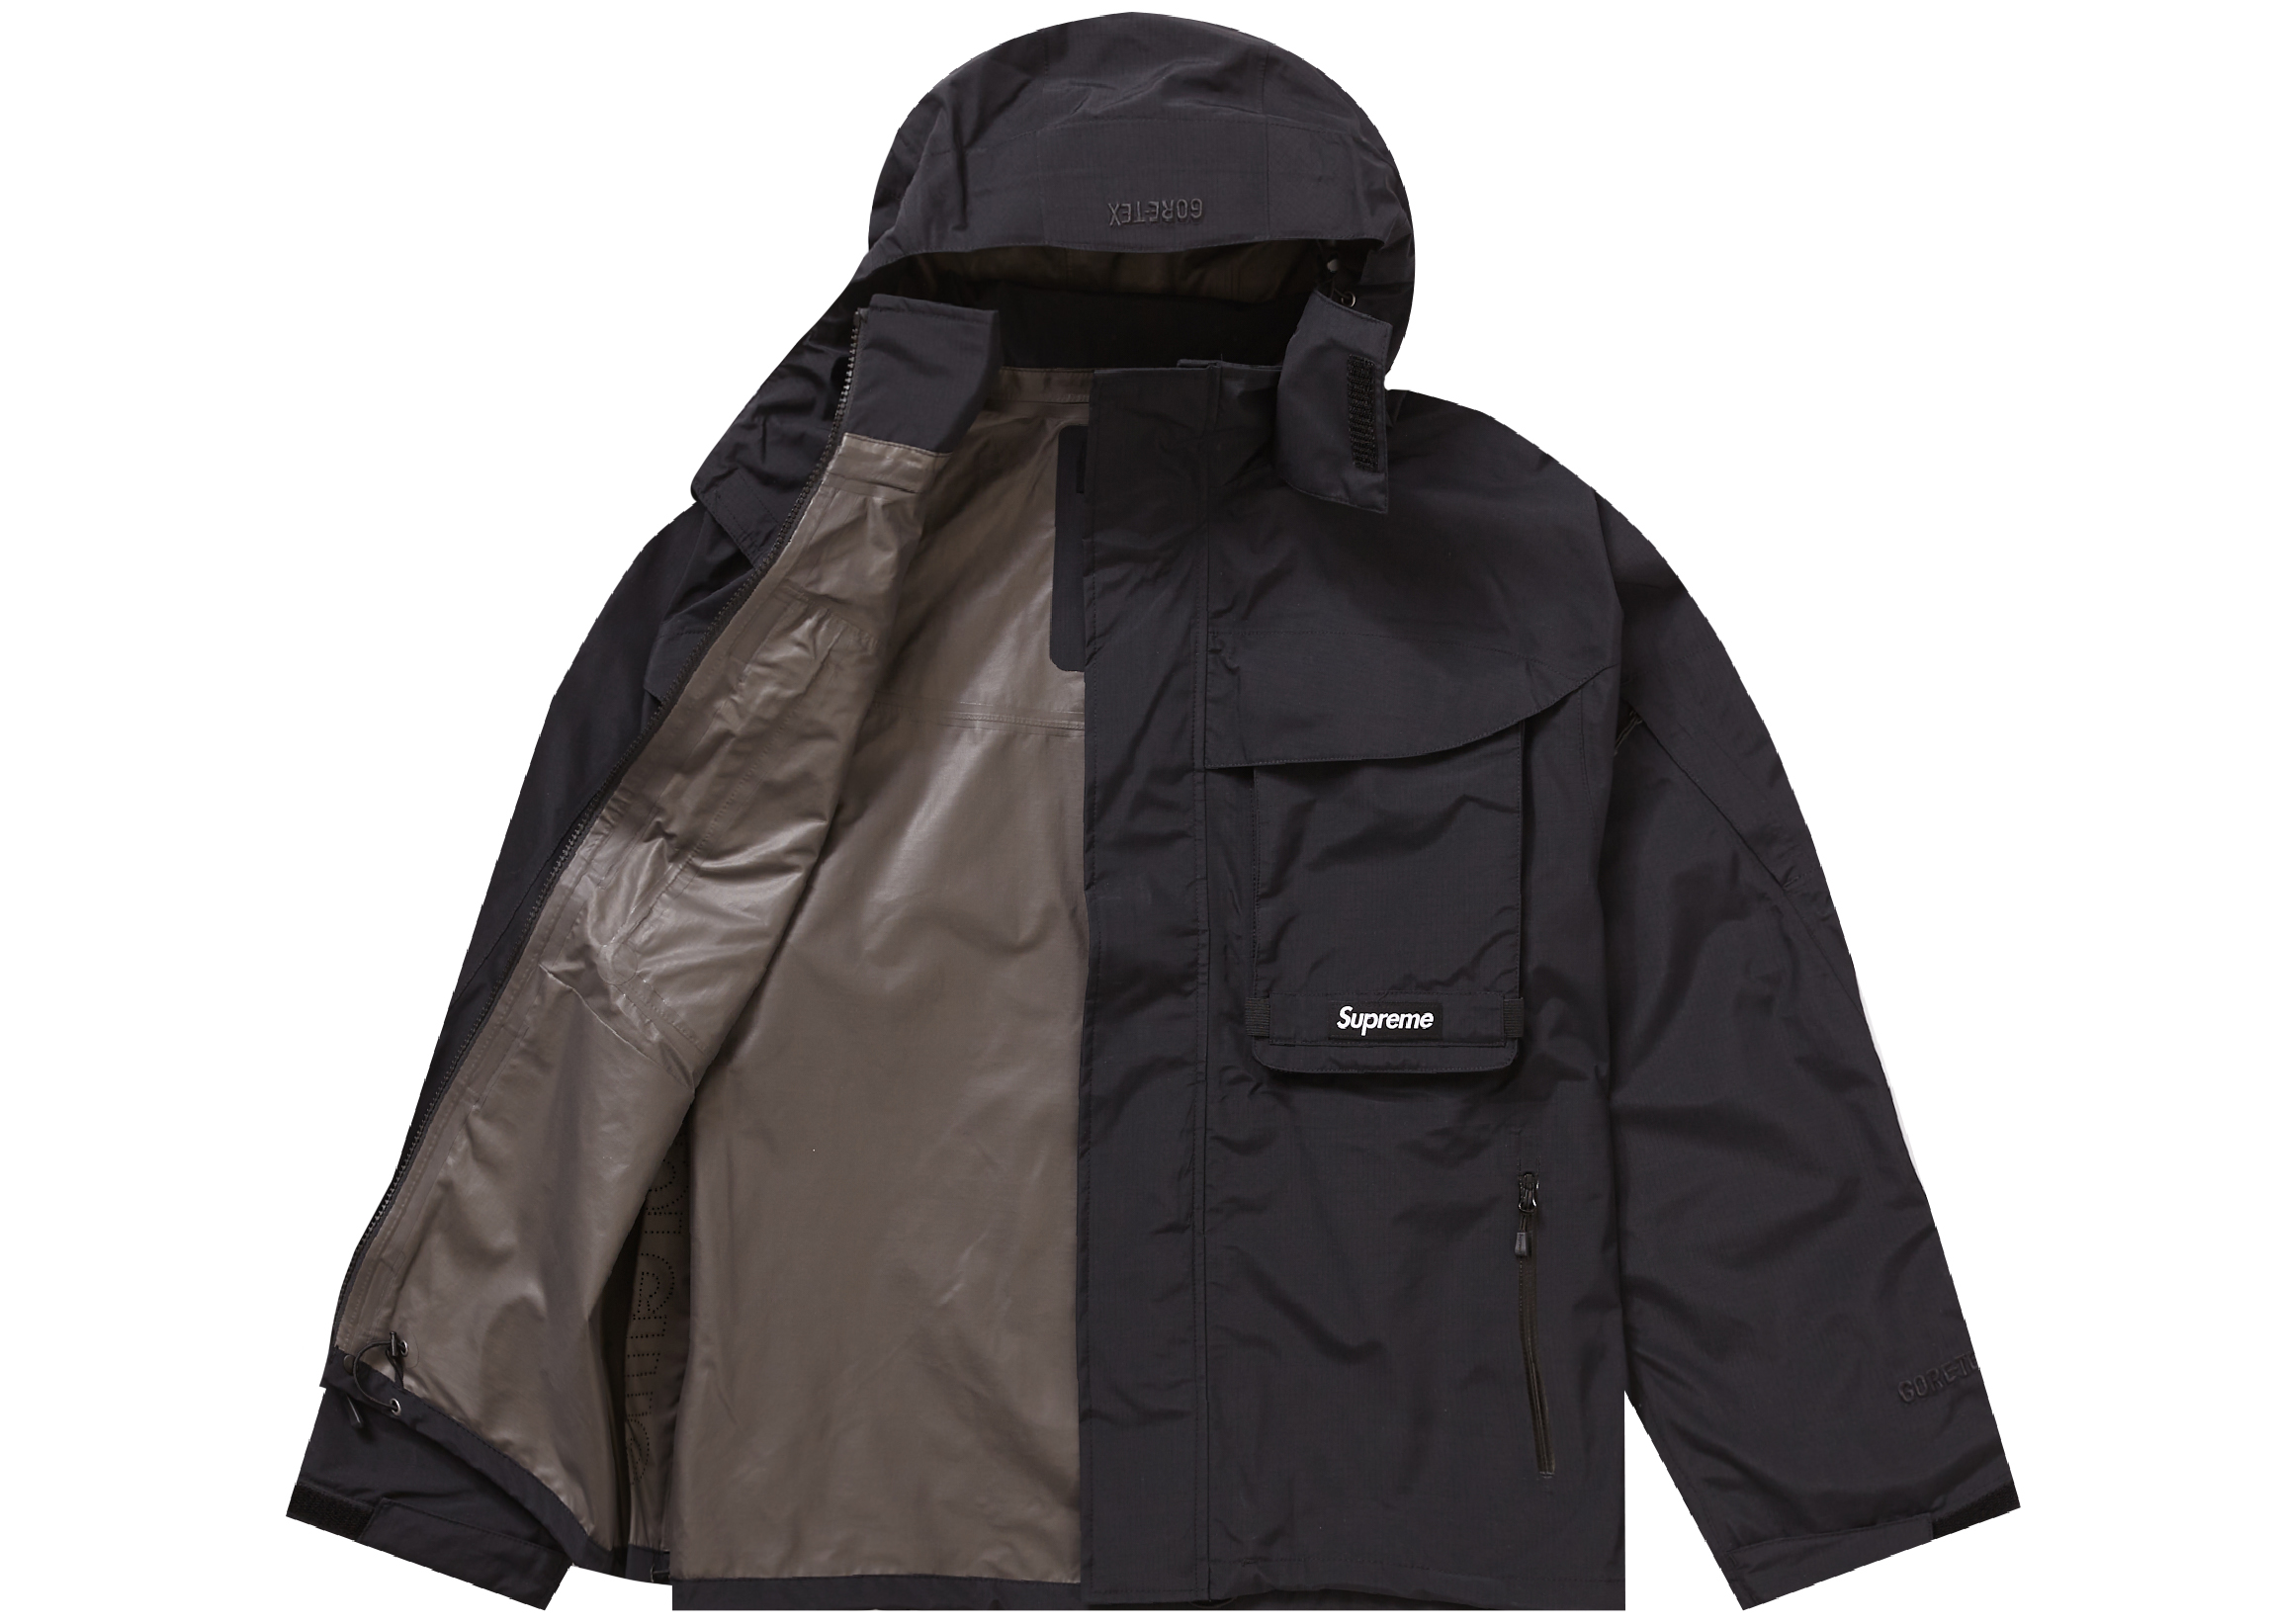 Supreme GORE-TEX PACLITE Jacket Black XL - www.amsfilling.com